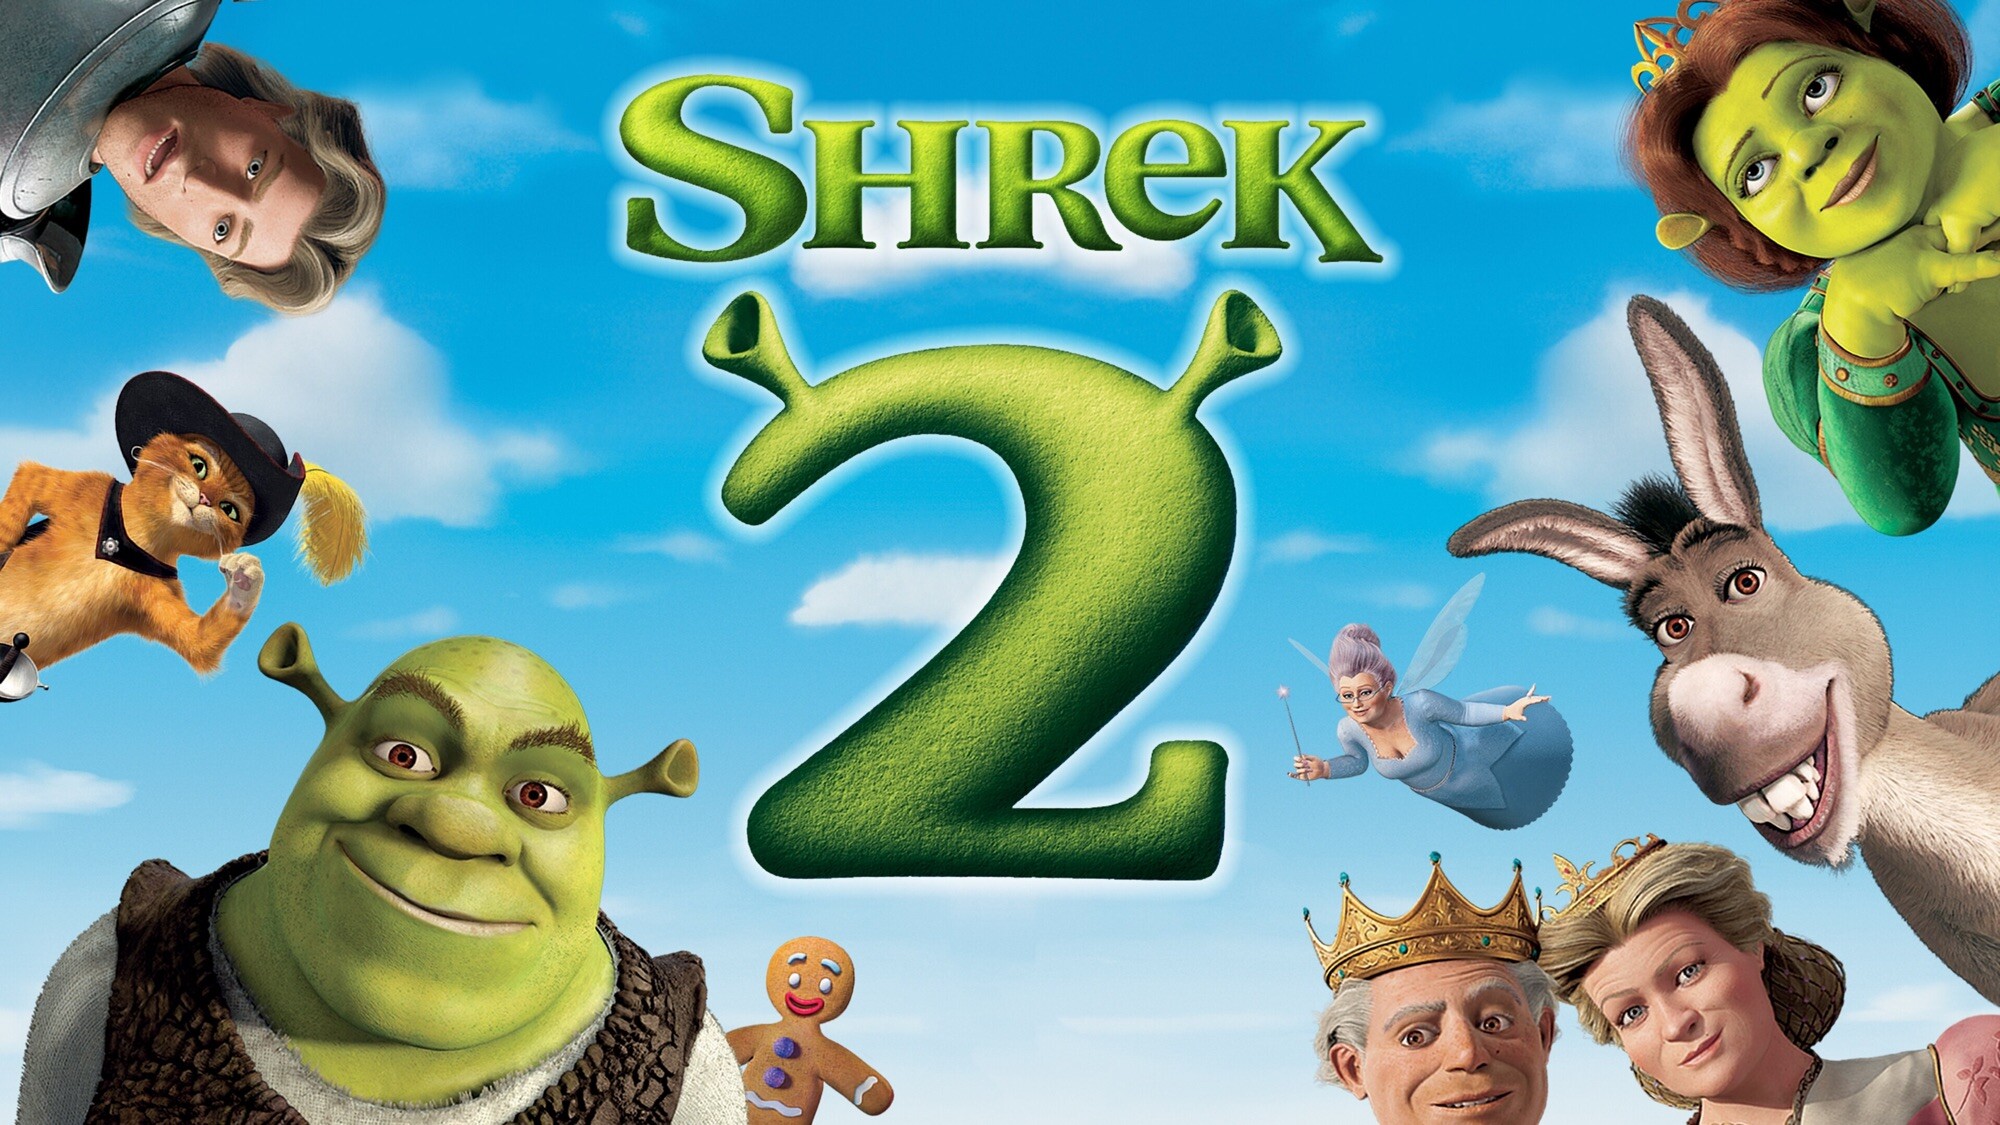 Shrek 2 wallpaper, High-definition image, Animated film, Adventure theme, 2000x1130 HD Desktop